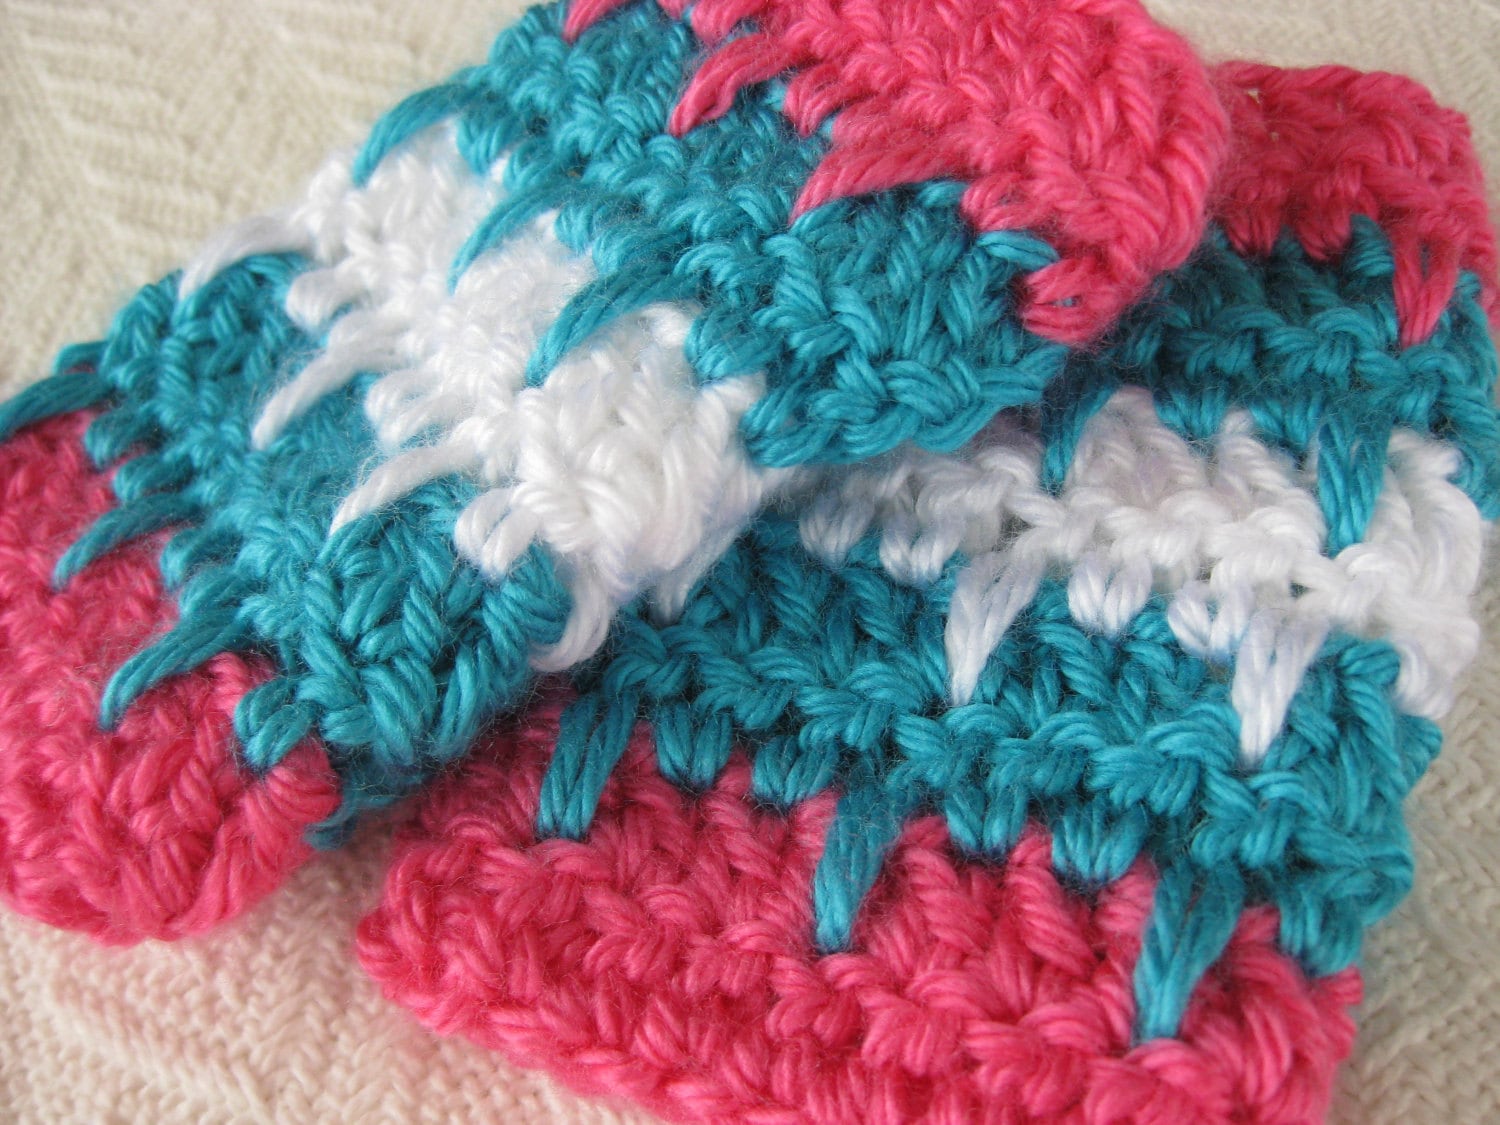 The Sunroom: Crochet Cobble Stitch Pattern